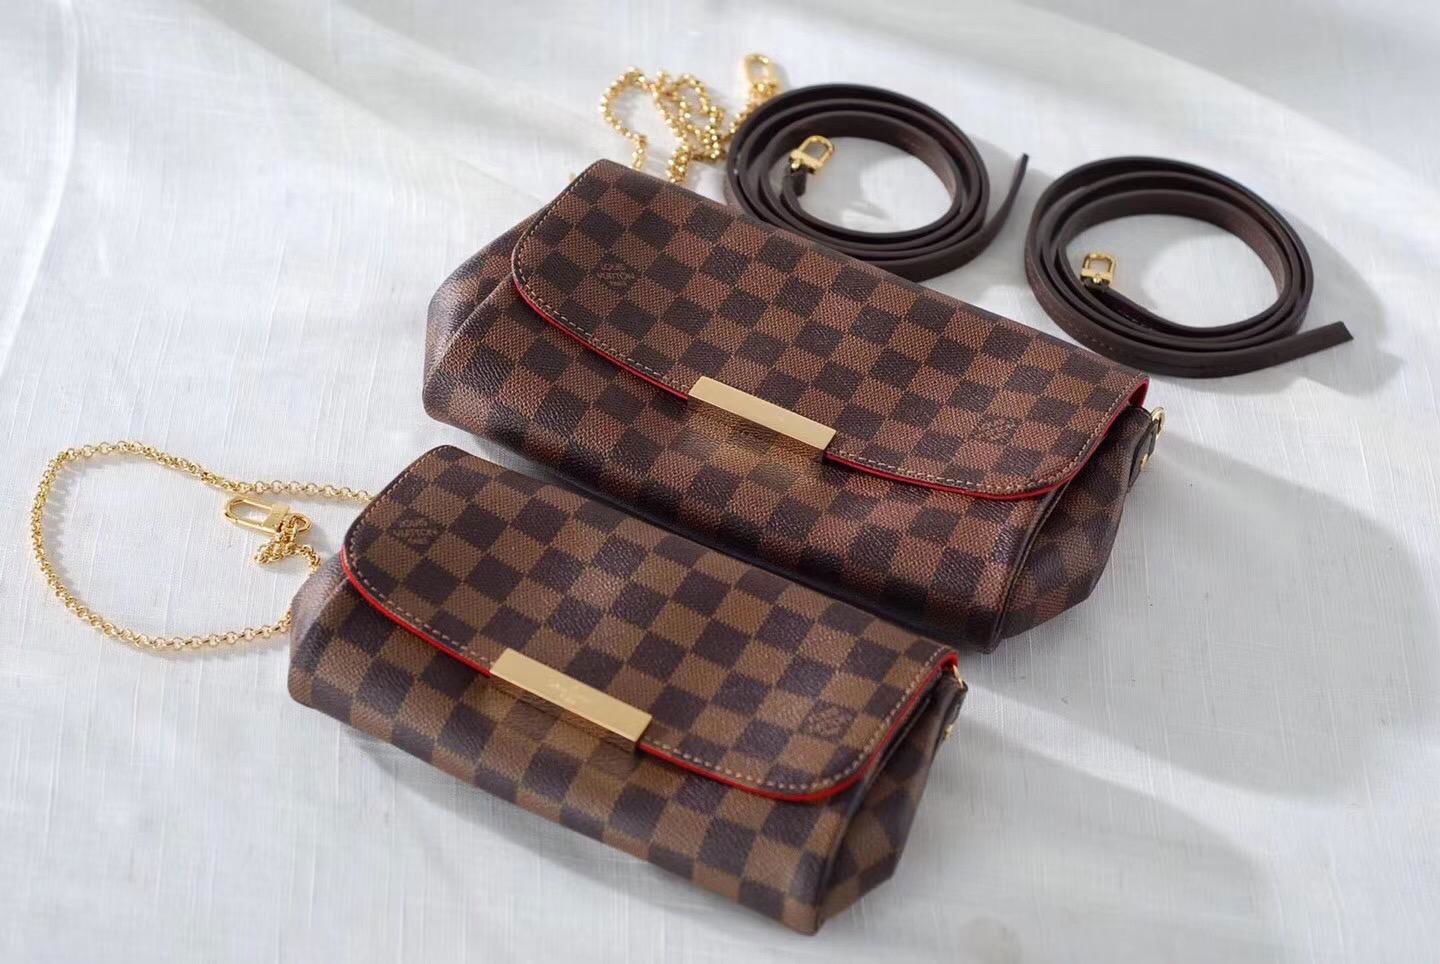 Cheap Louis Vuitton handbags LV NEVERFULL Louis Vuitton Bags for sale (China Trading Company ...